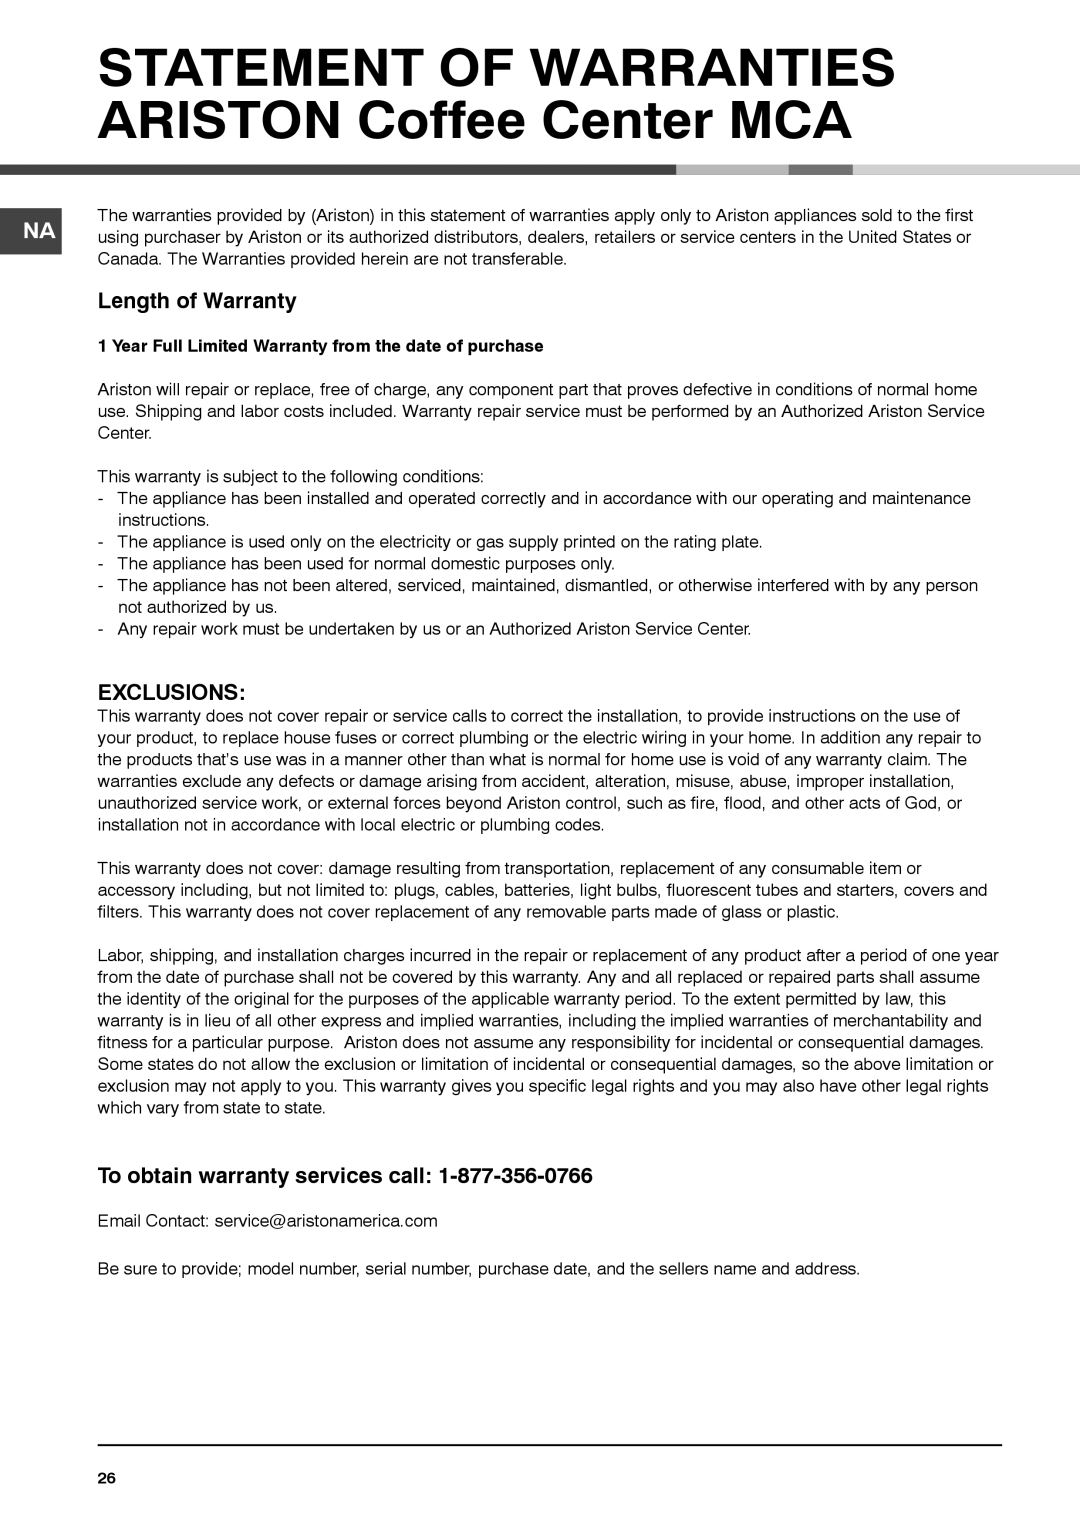 Ariston MCA15NAP Statement of Warranties Ariston Coffee Center MCA, Length of Warranty, To obtain warranty services call 